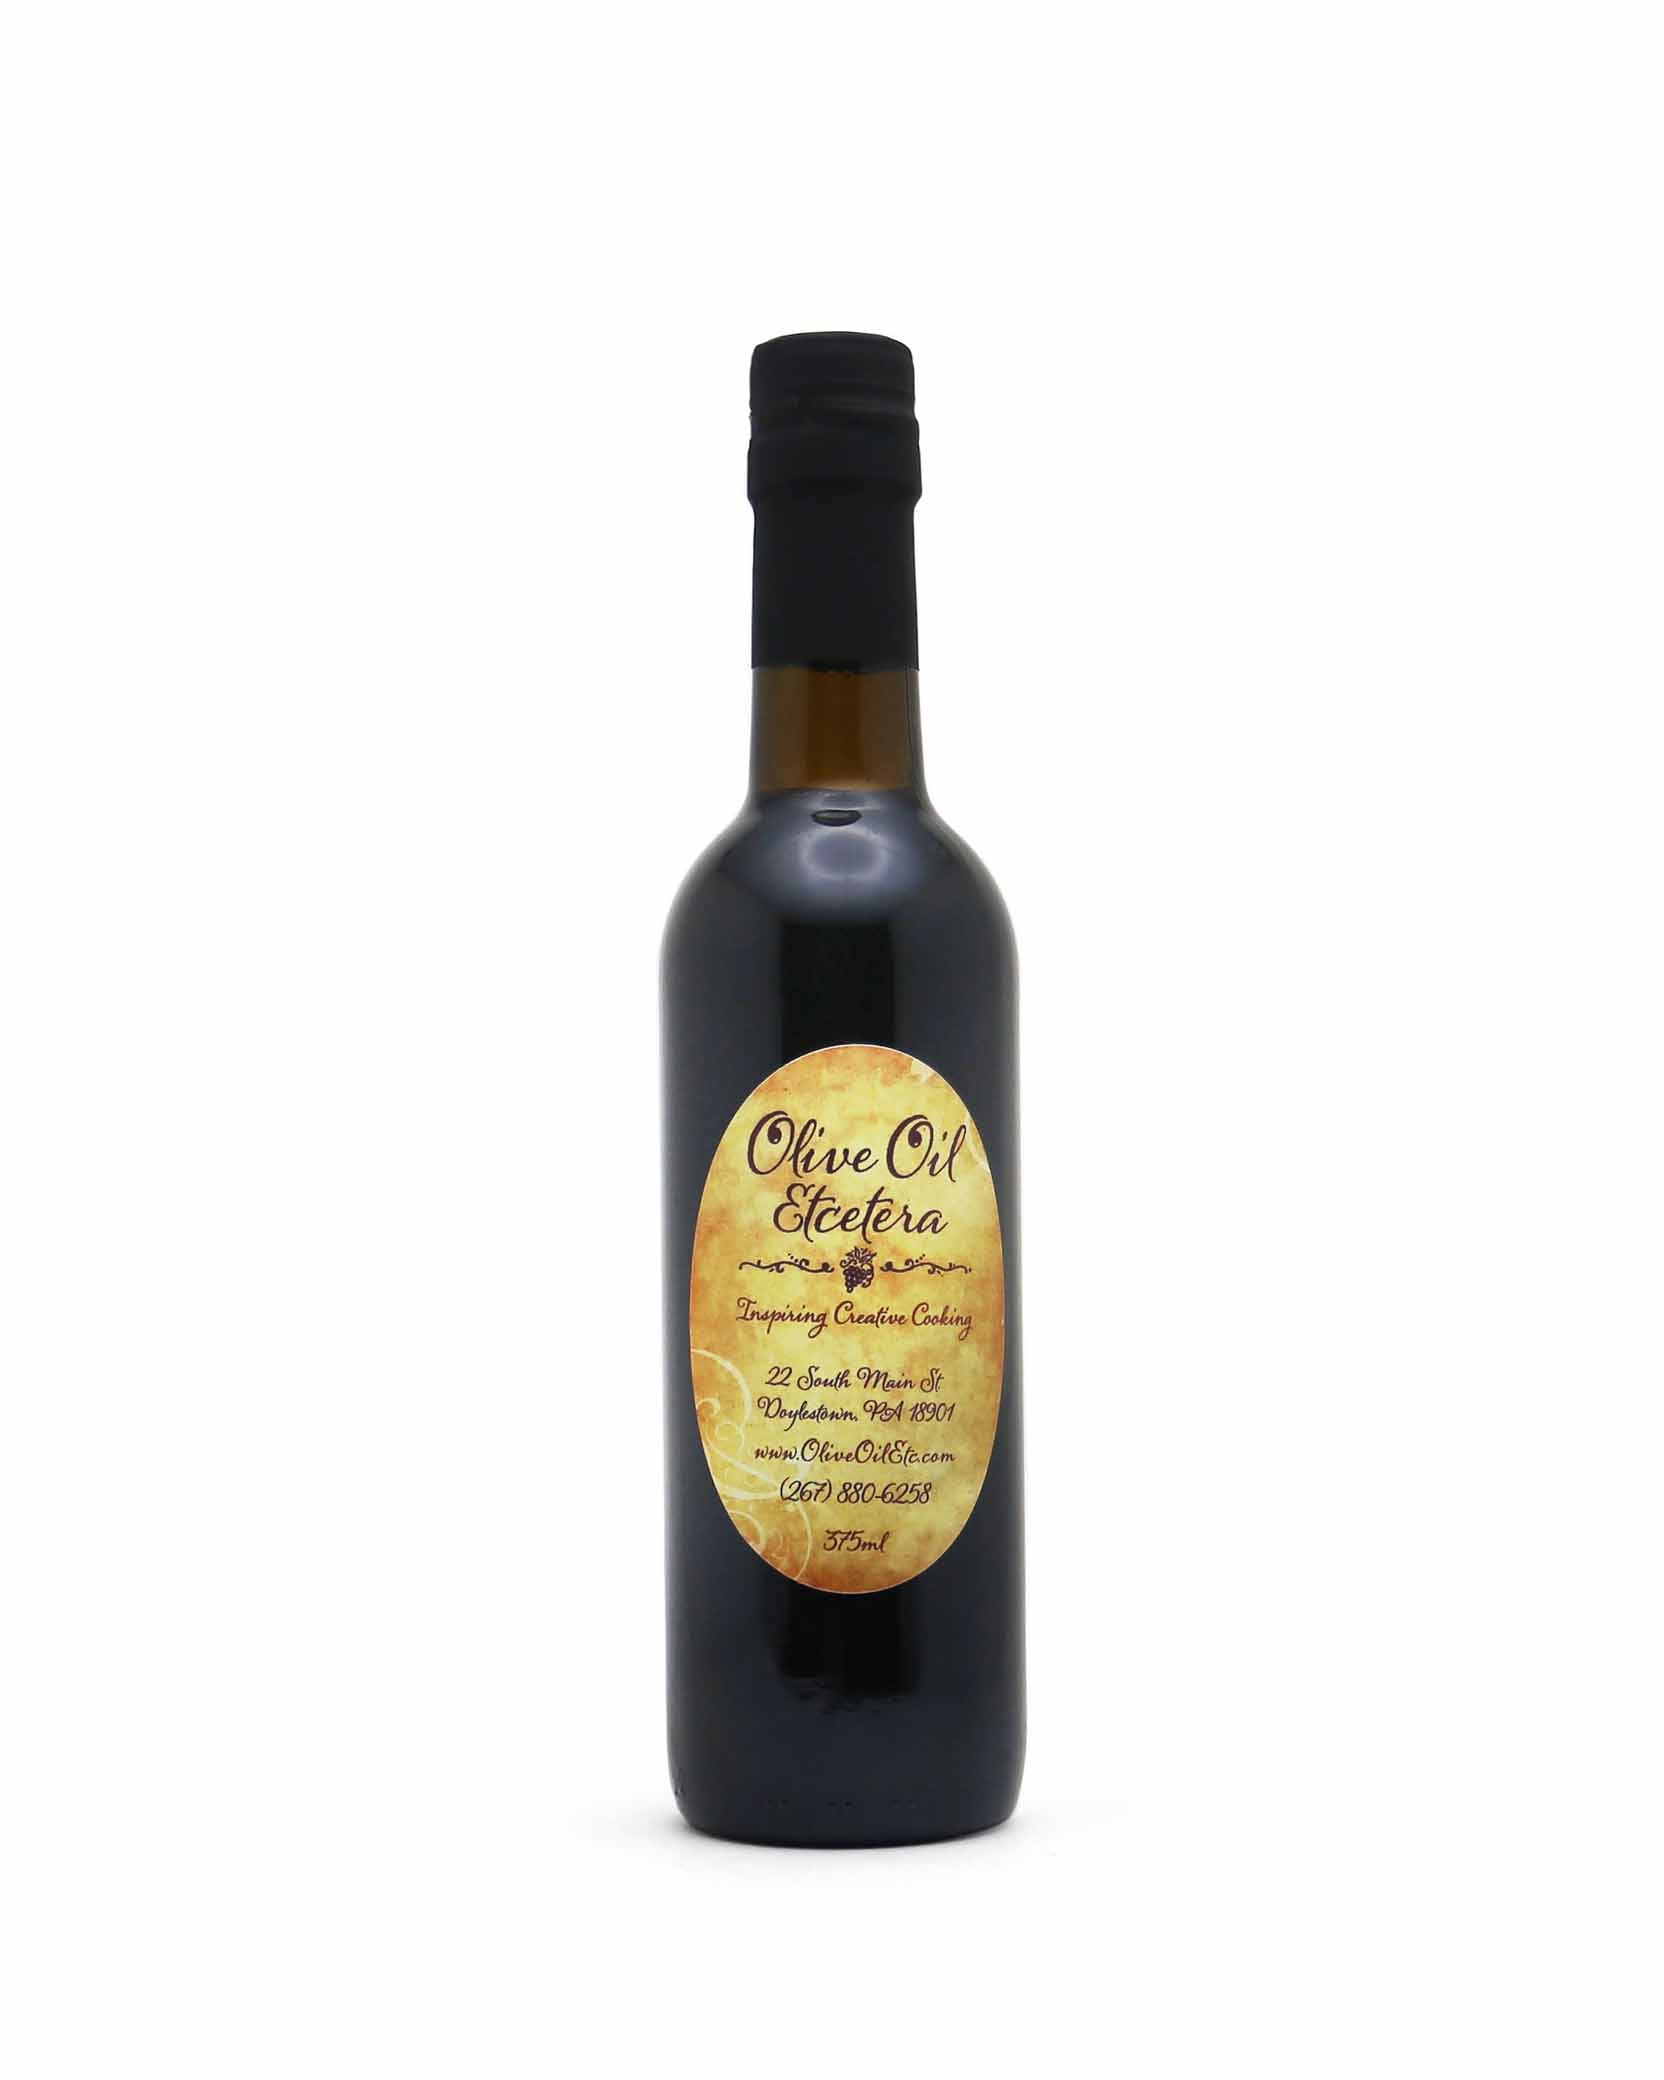 Black Walnut Balsamic Vinegar - Olive Oil Etcetera - Bucks county's gourmet olive oil and vinegar shop